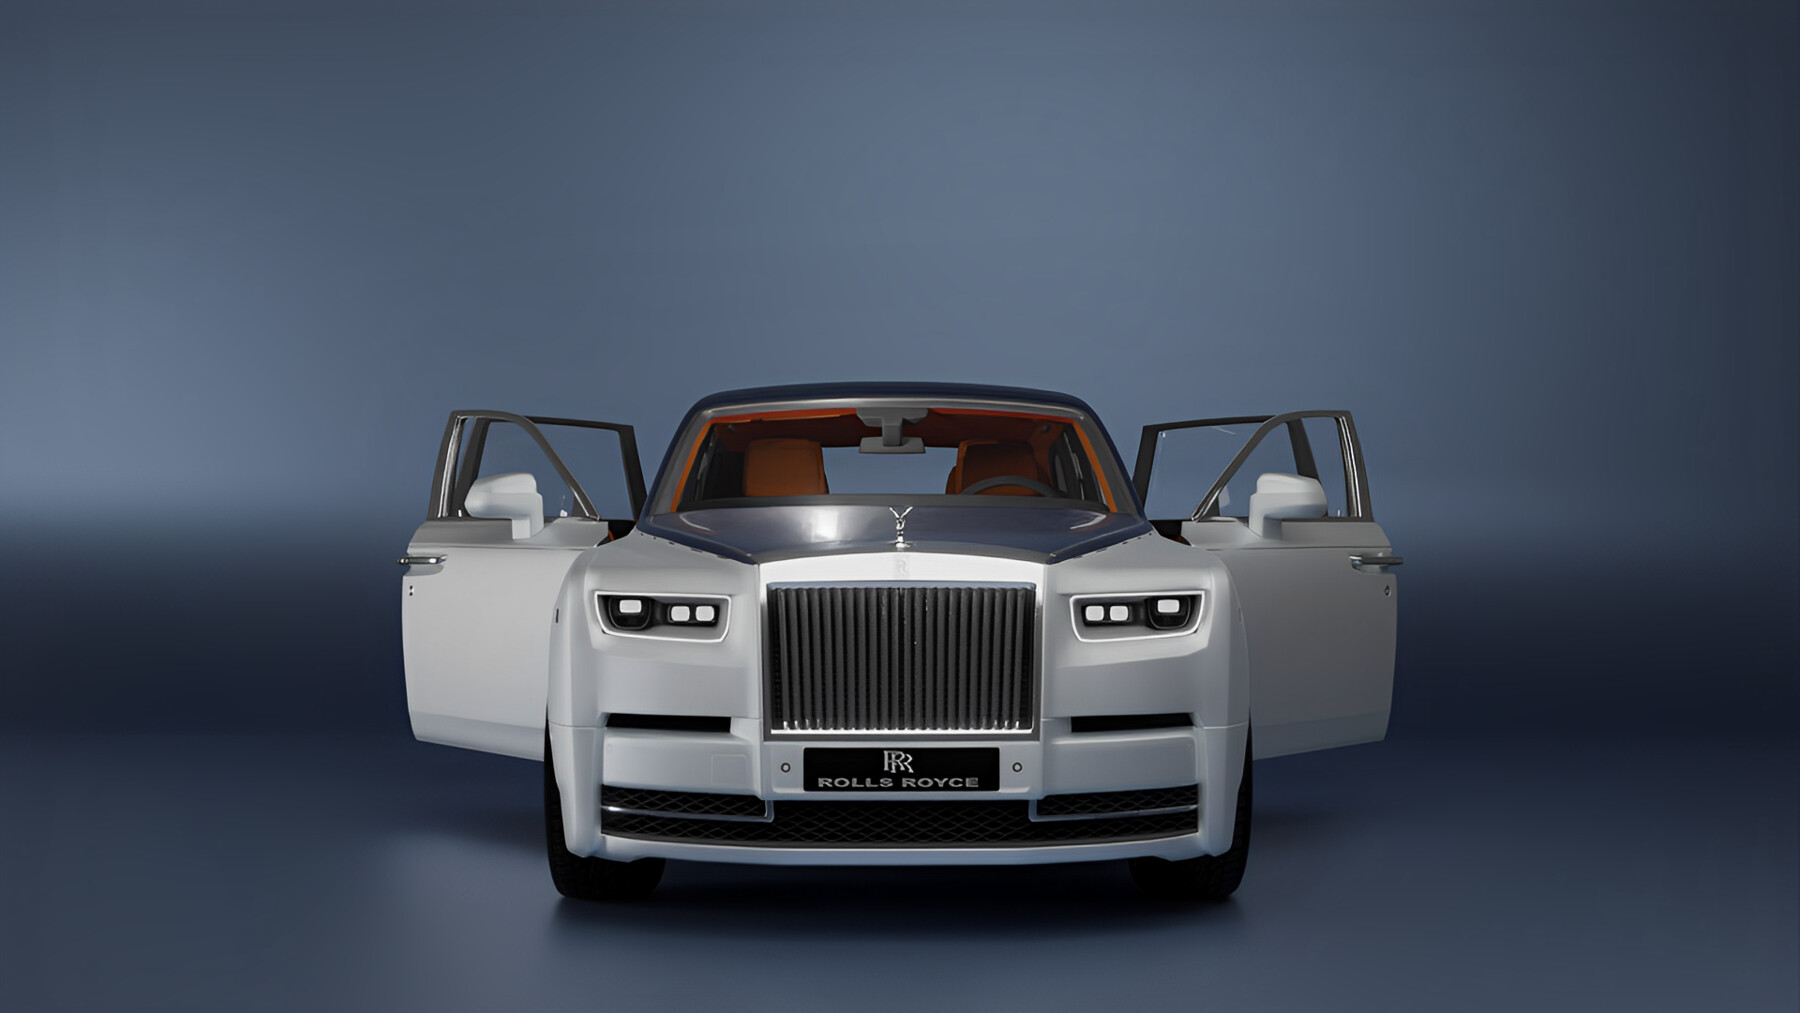 Rolls-Royce Phantom Drophead Coupe Monster Truck Looks Real